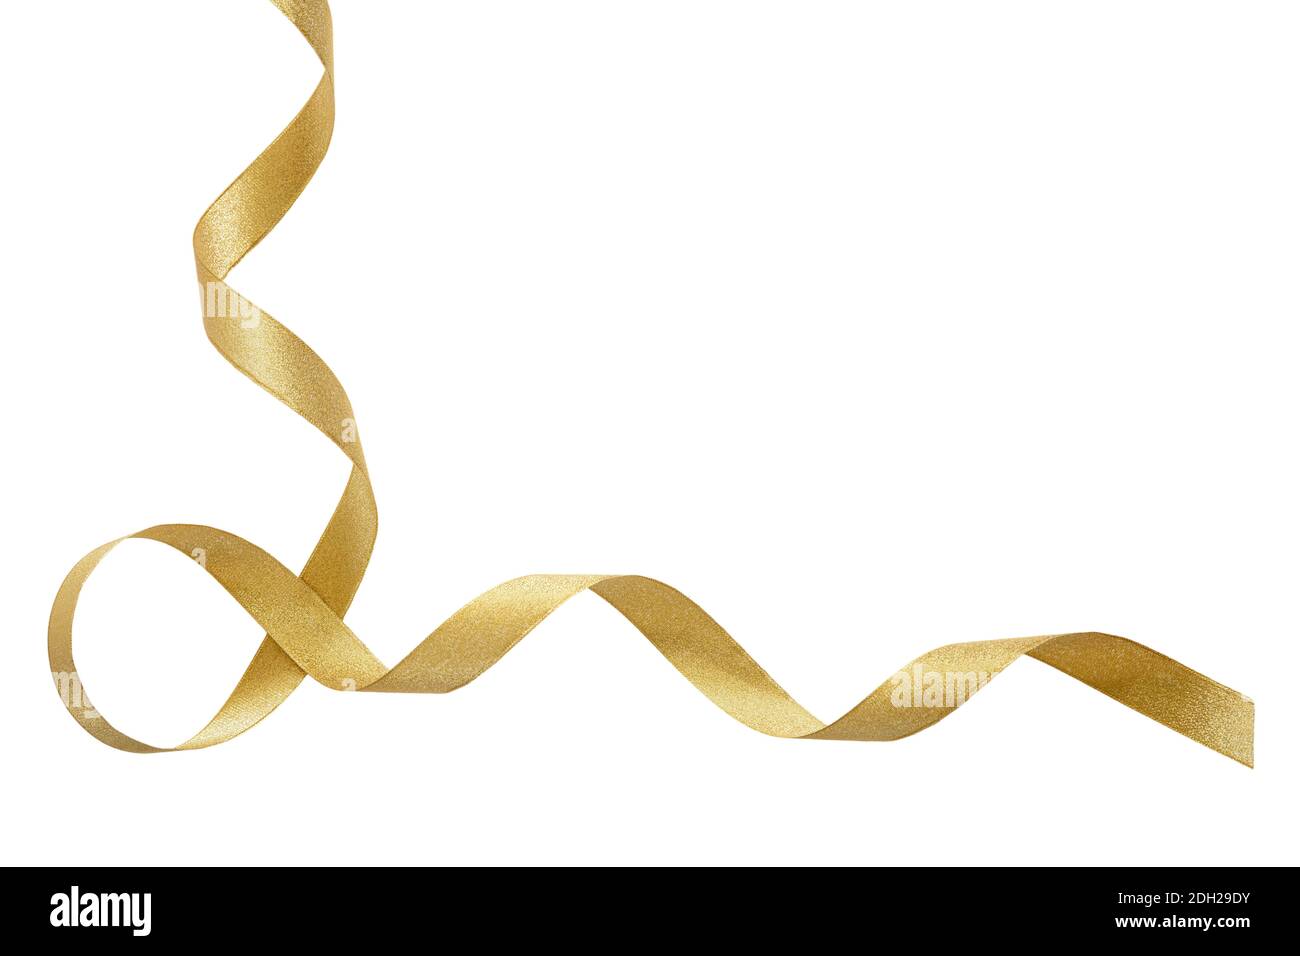 Shiny Gold Satin Ribbon On White Background Stock Illustration